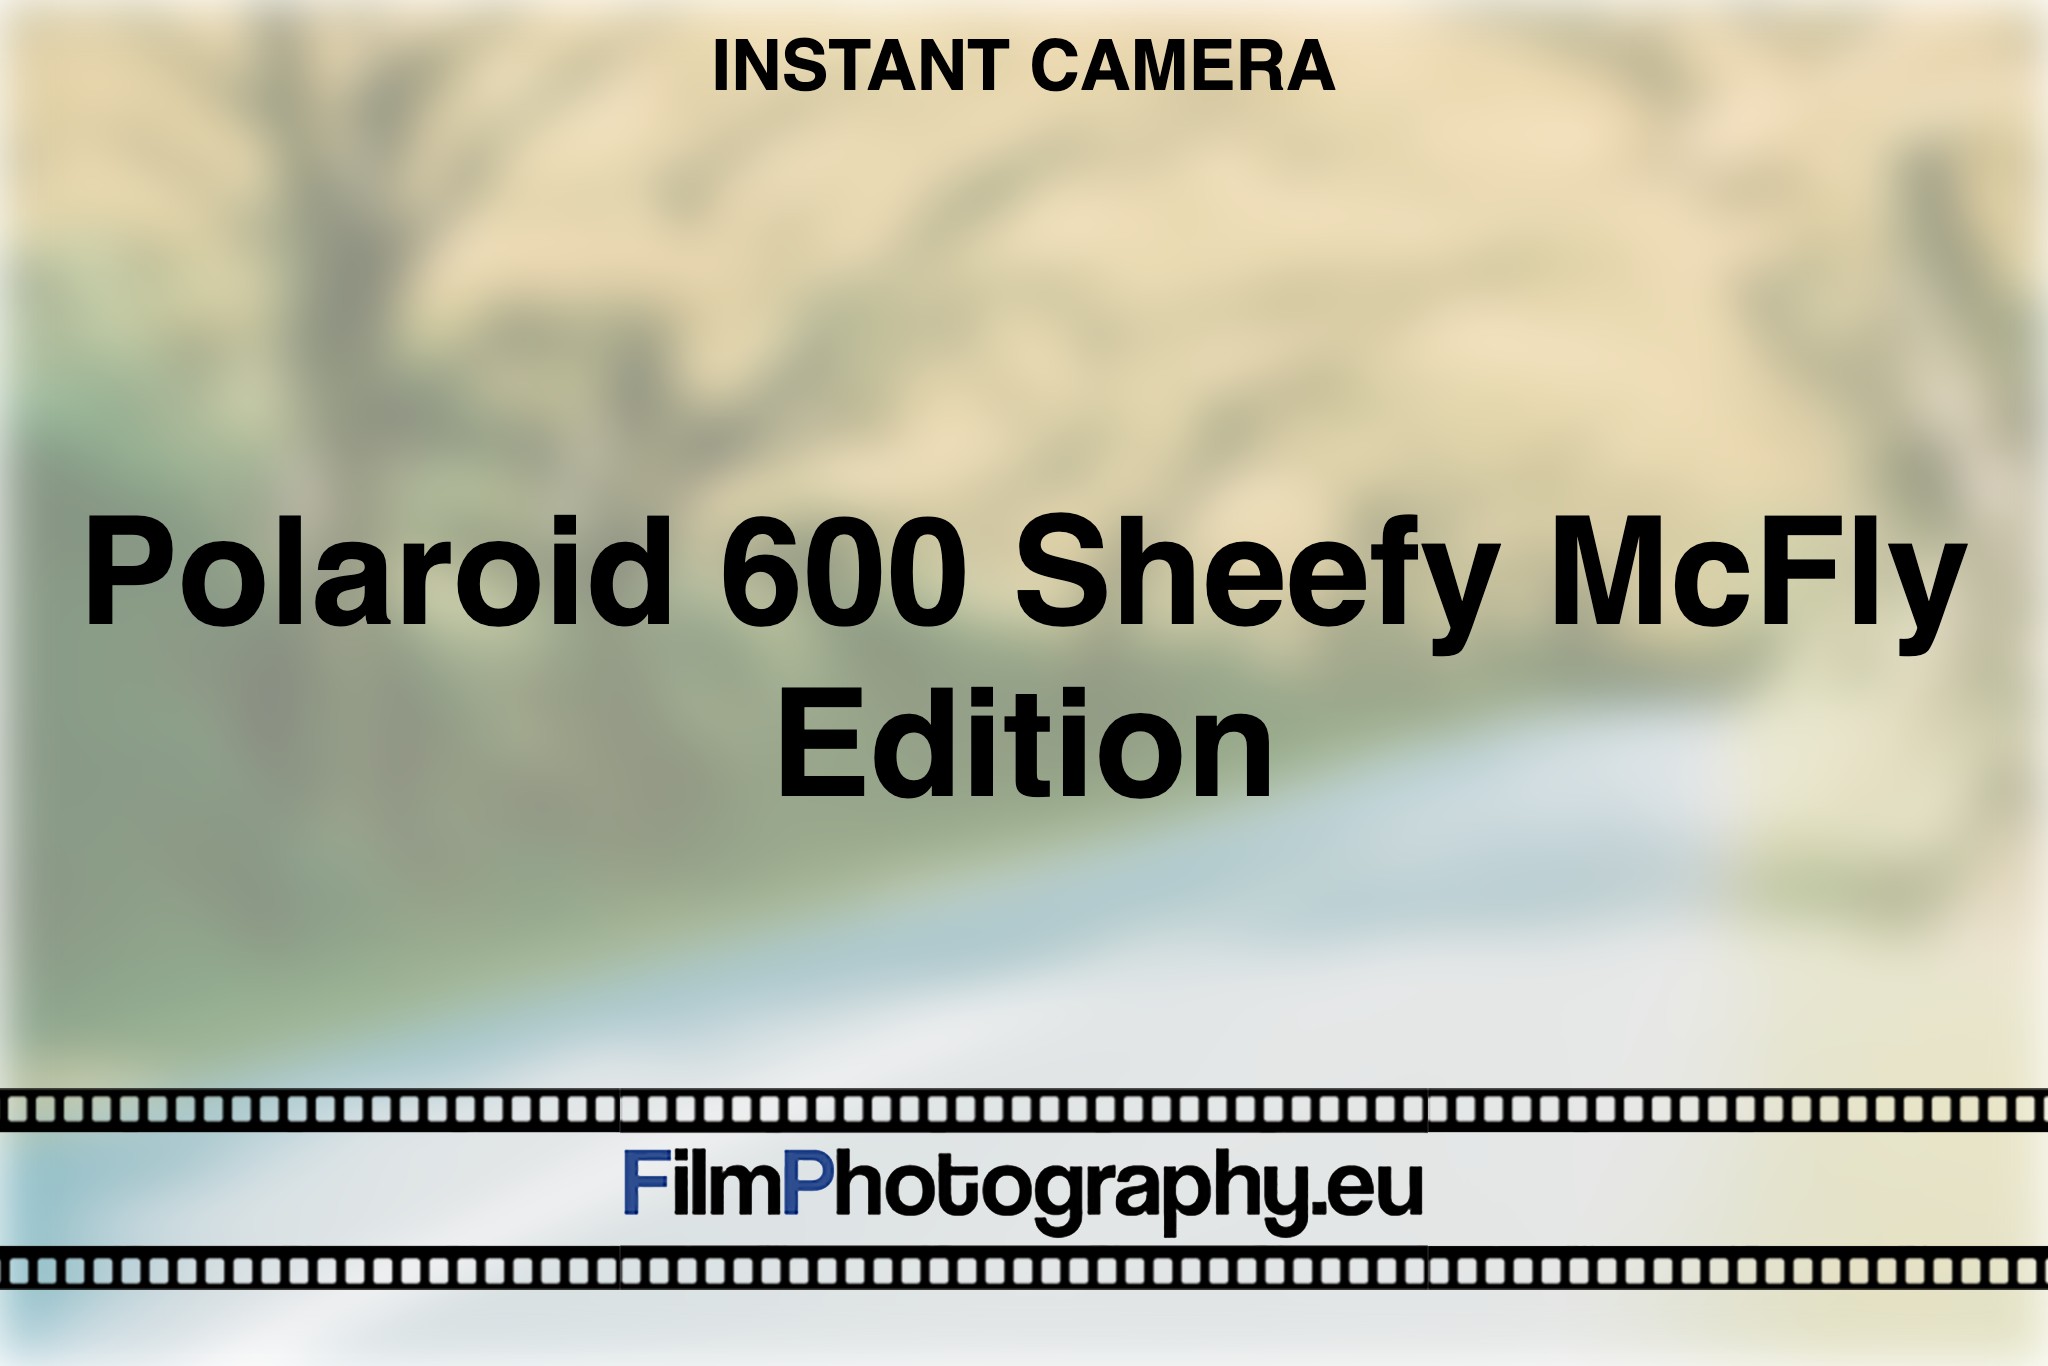 polaroid-600-sheefy-mcfly-edition-instant-camera-bnv